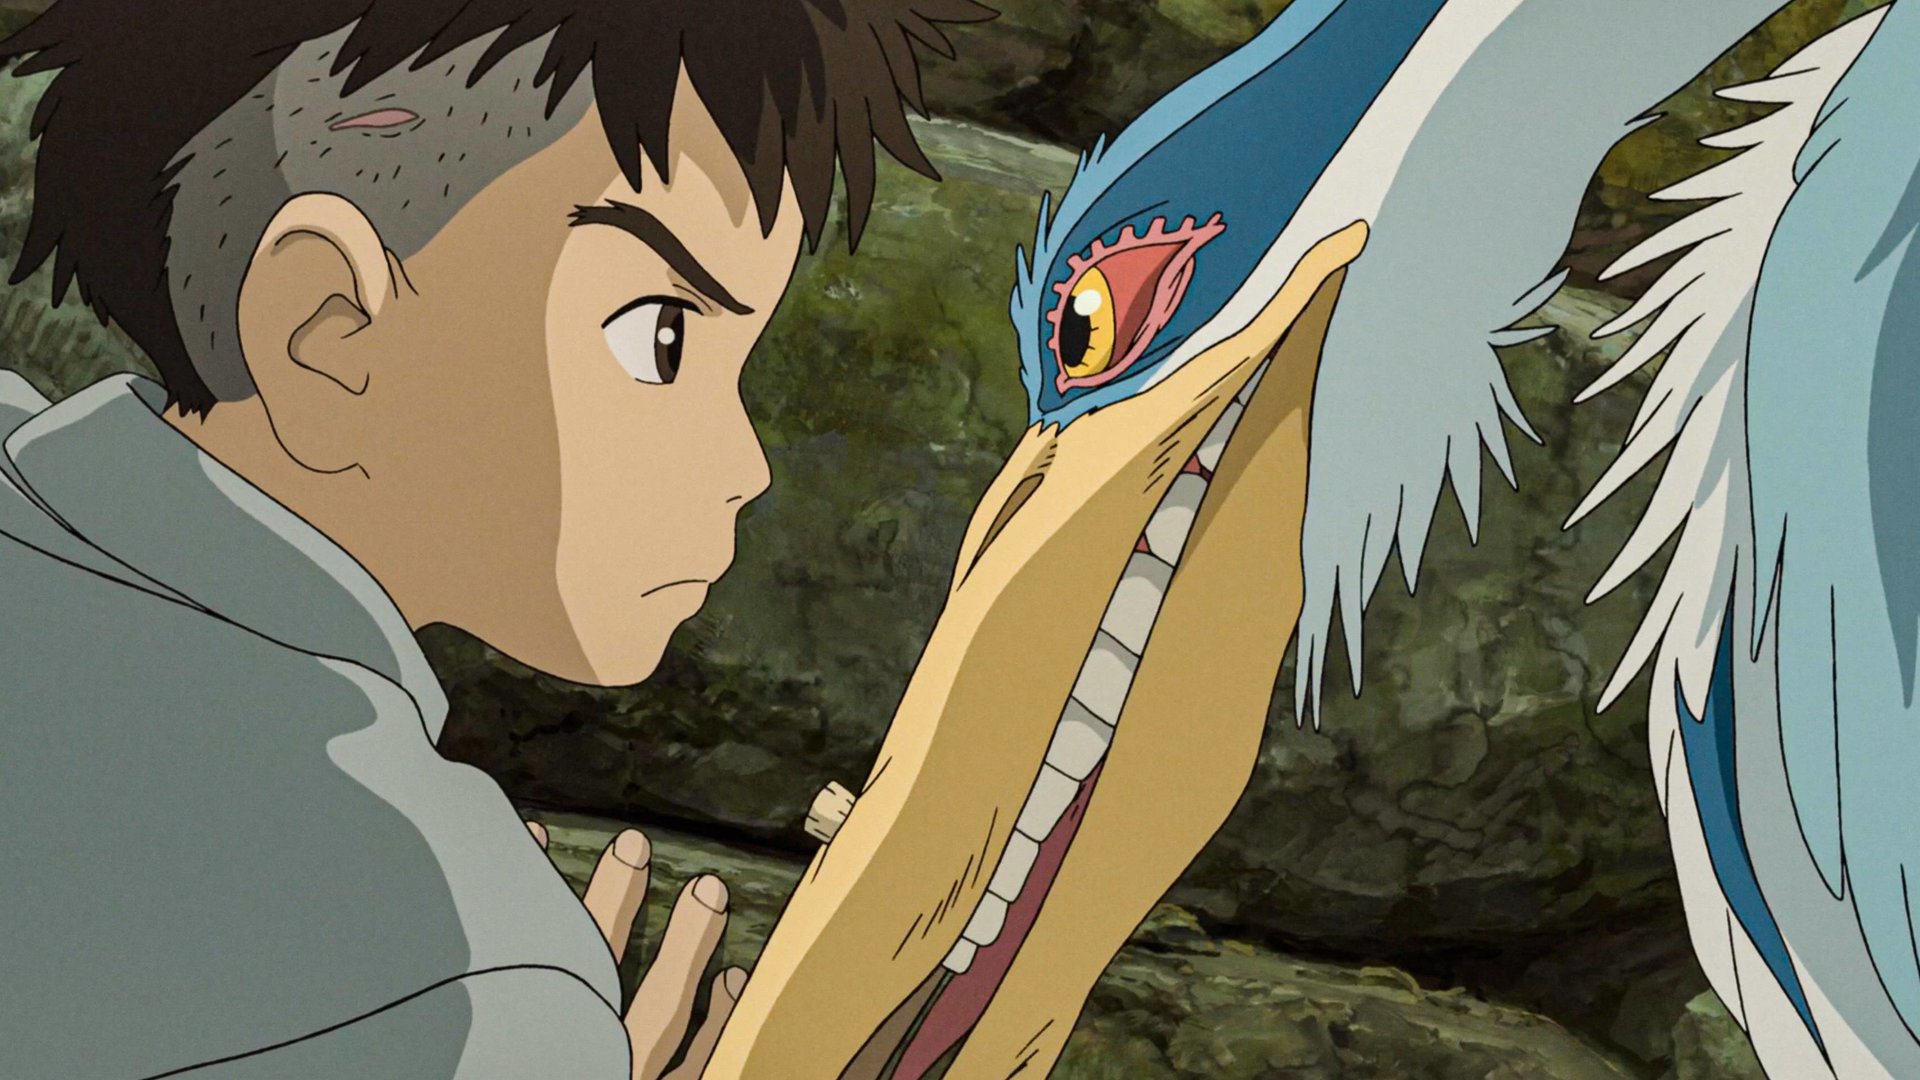 #Neuer Ghibli-Film enthüllt? Anime-Legende Hayao Miyazaki arbeitet an nächstem Projekt